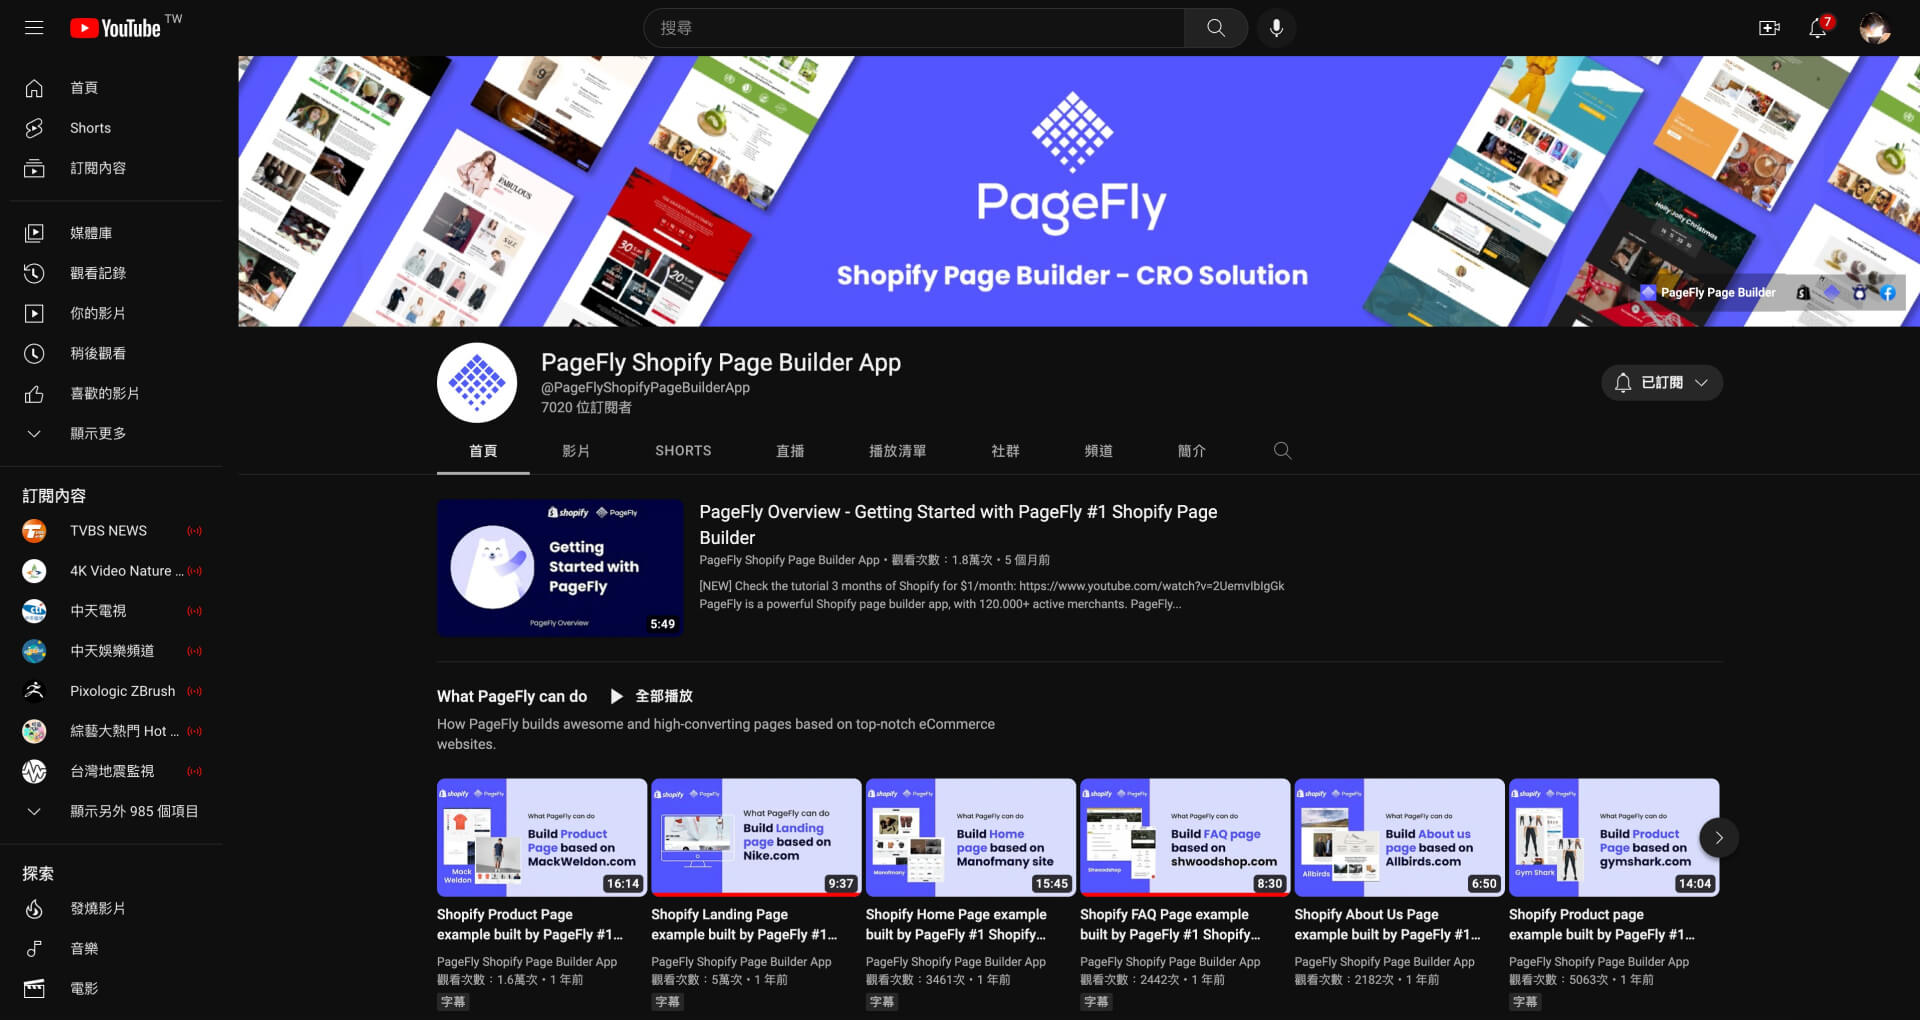 PageFly YouTube Channel 影片頻道-Irvinglab 爾文實驗室